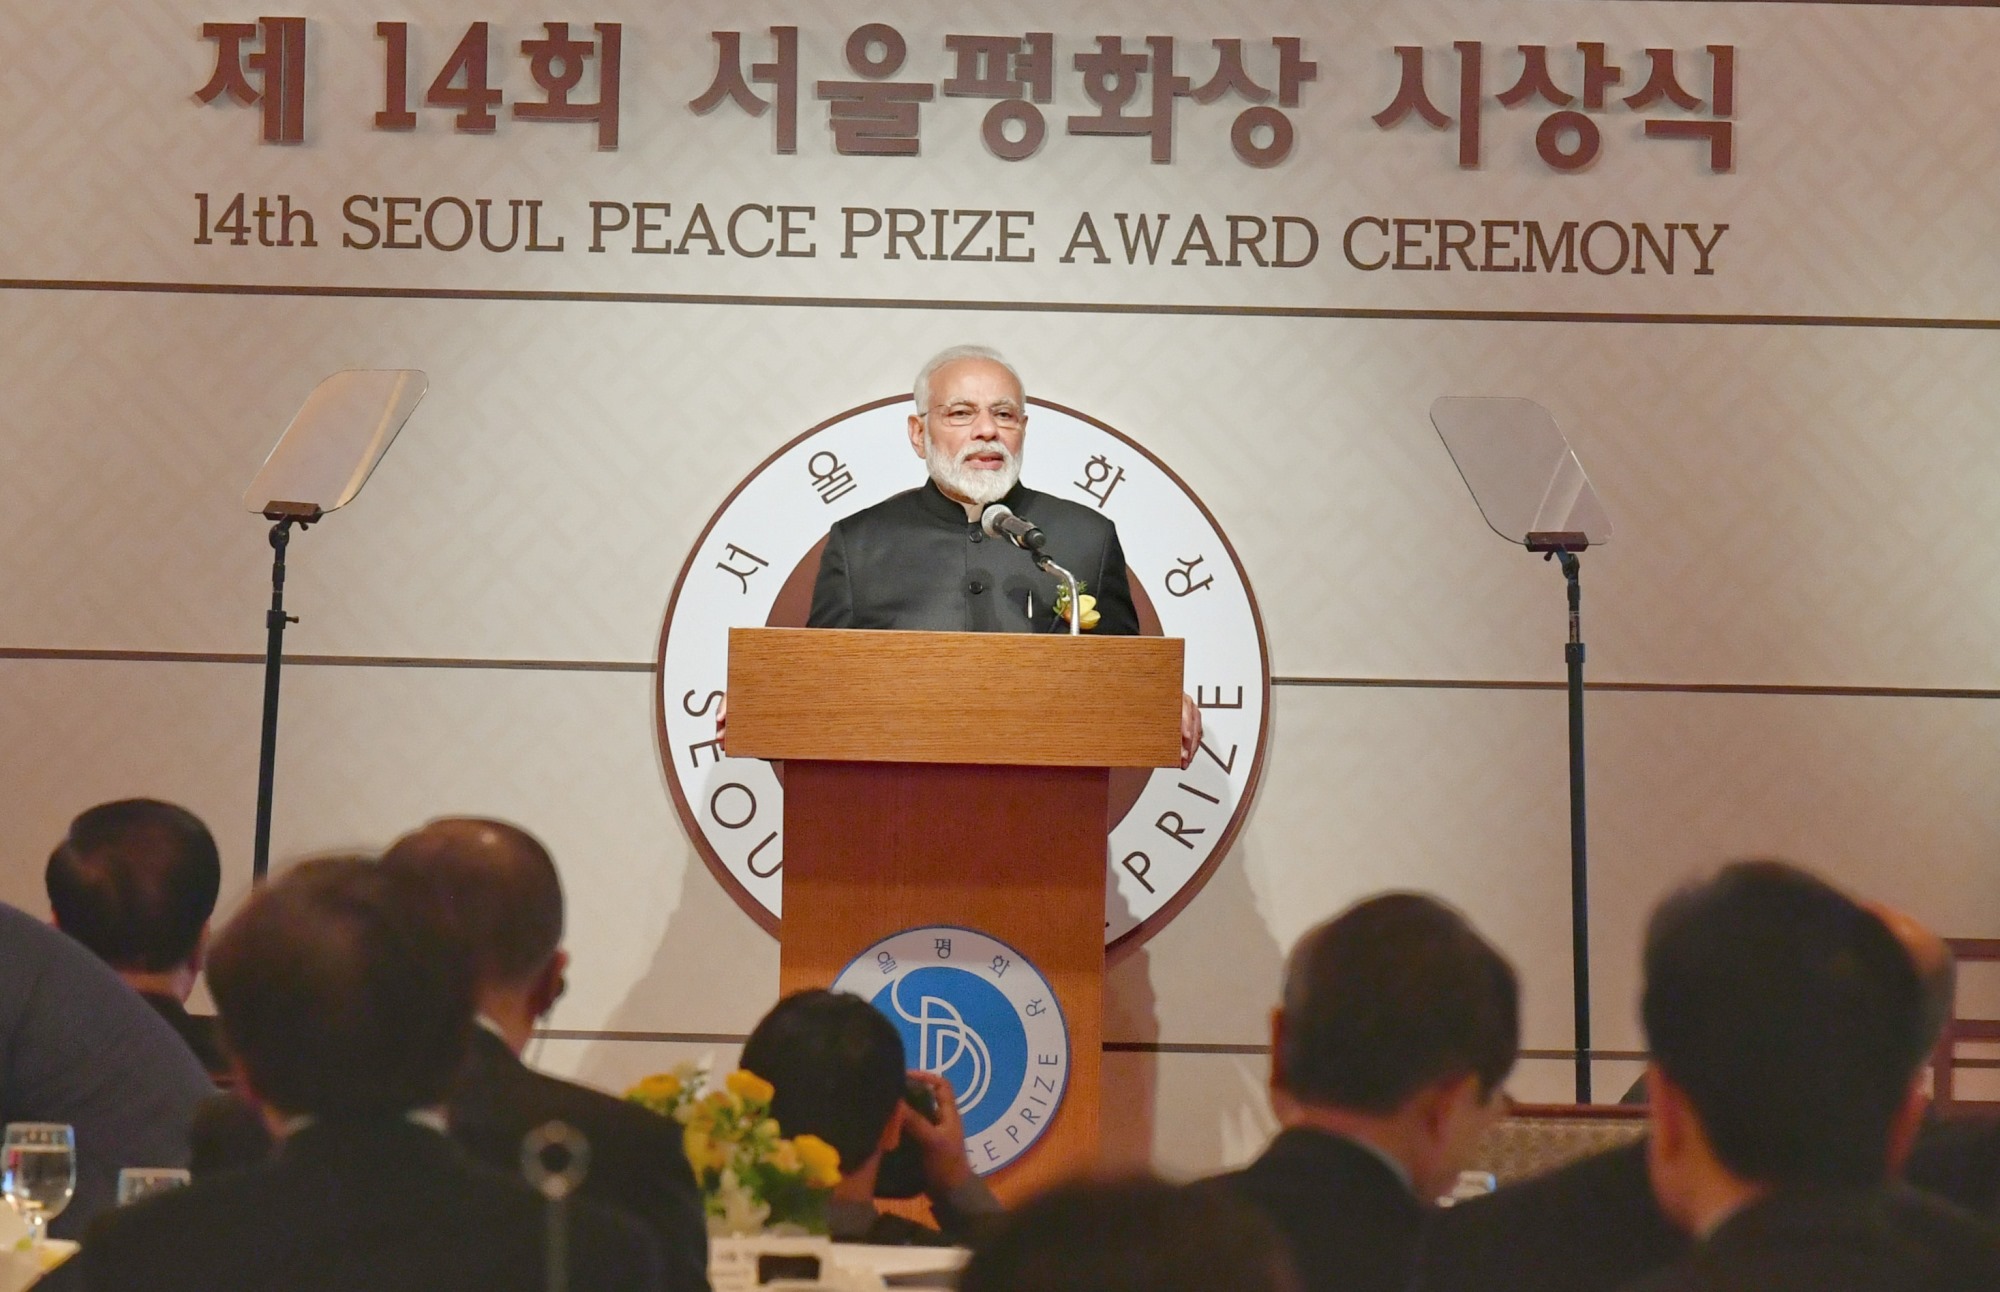 The Prime Minister, Shri Narendra Modi addressing after receiving the Seoul Peace Prize, in Seoul, South Korea on February 22, 2019.